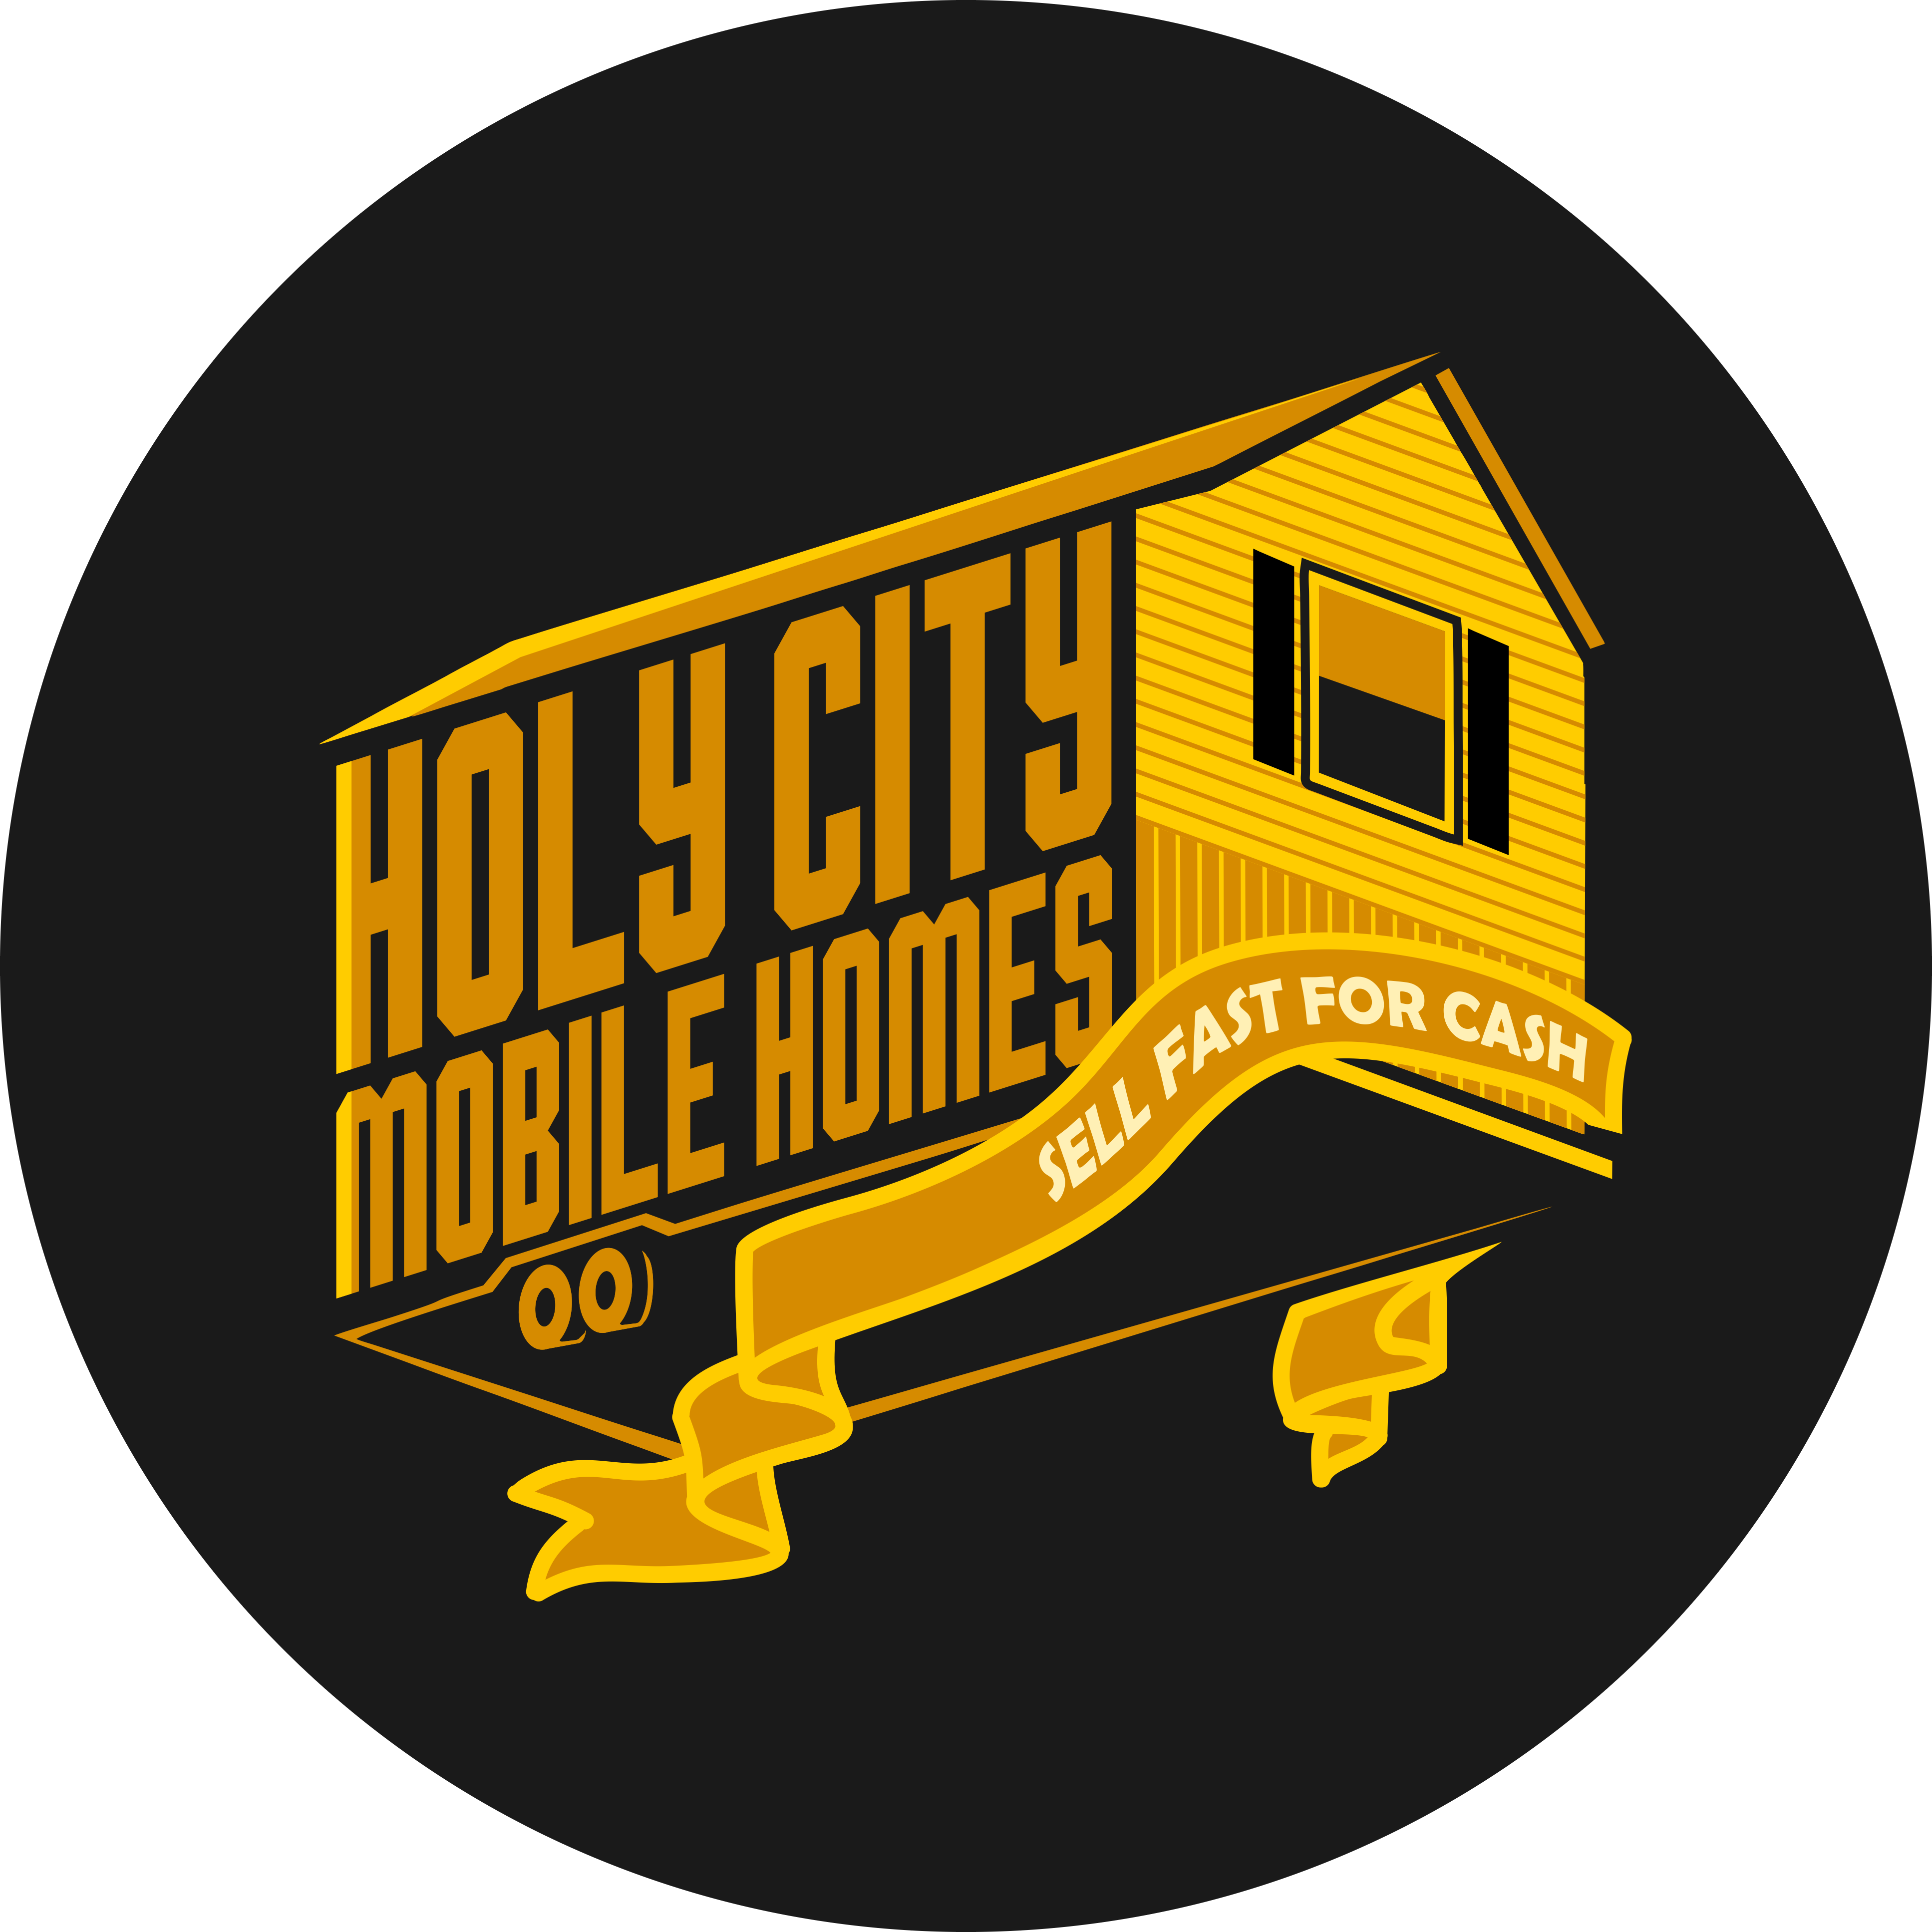 Holy City Mobile Homes logo